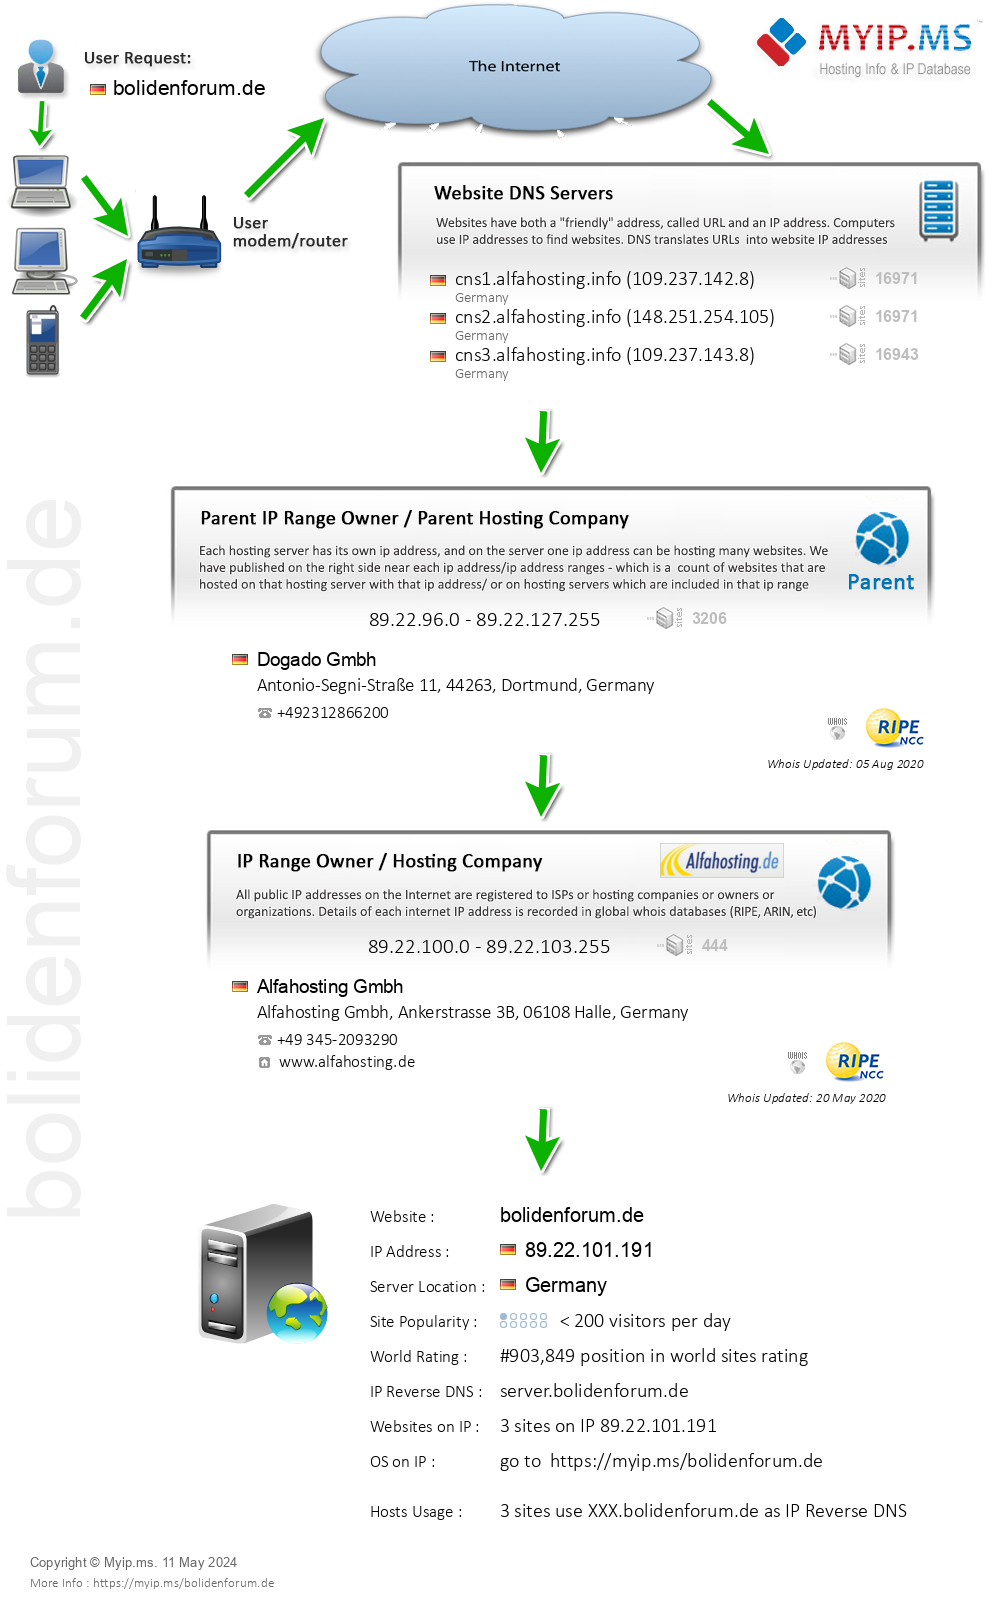 Bolidenforum.de - Website Hosting Visual IP Diagram